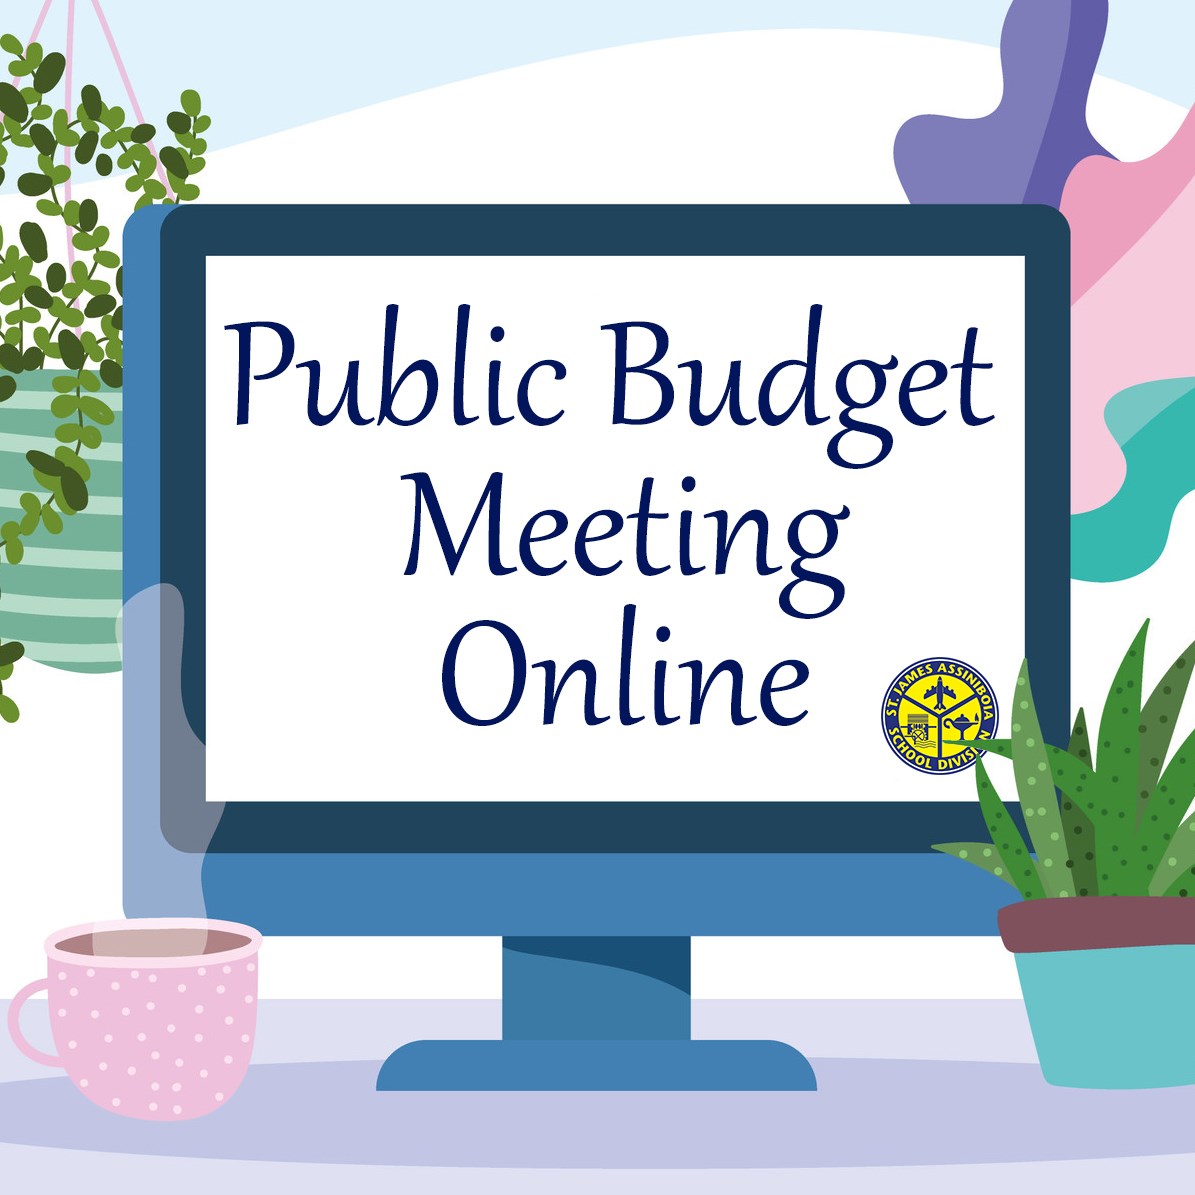 Public Budget Meeting Online_1.jpg